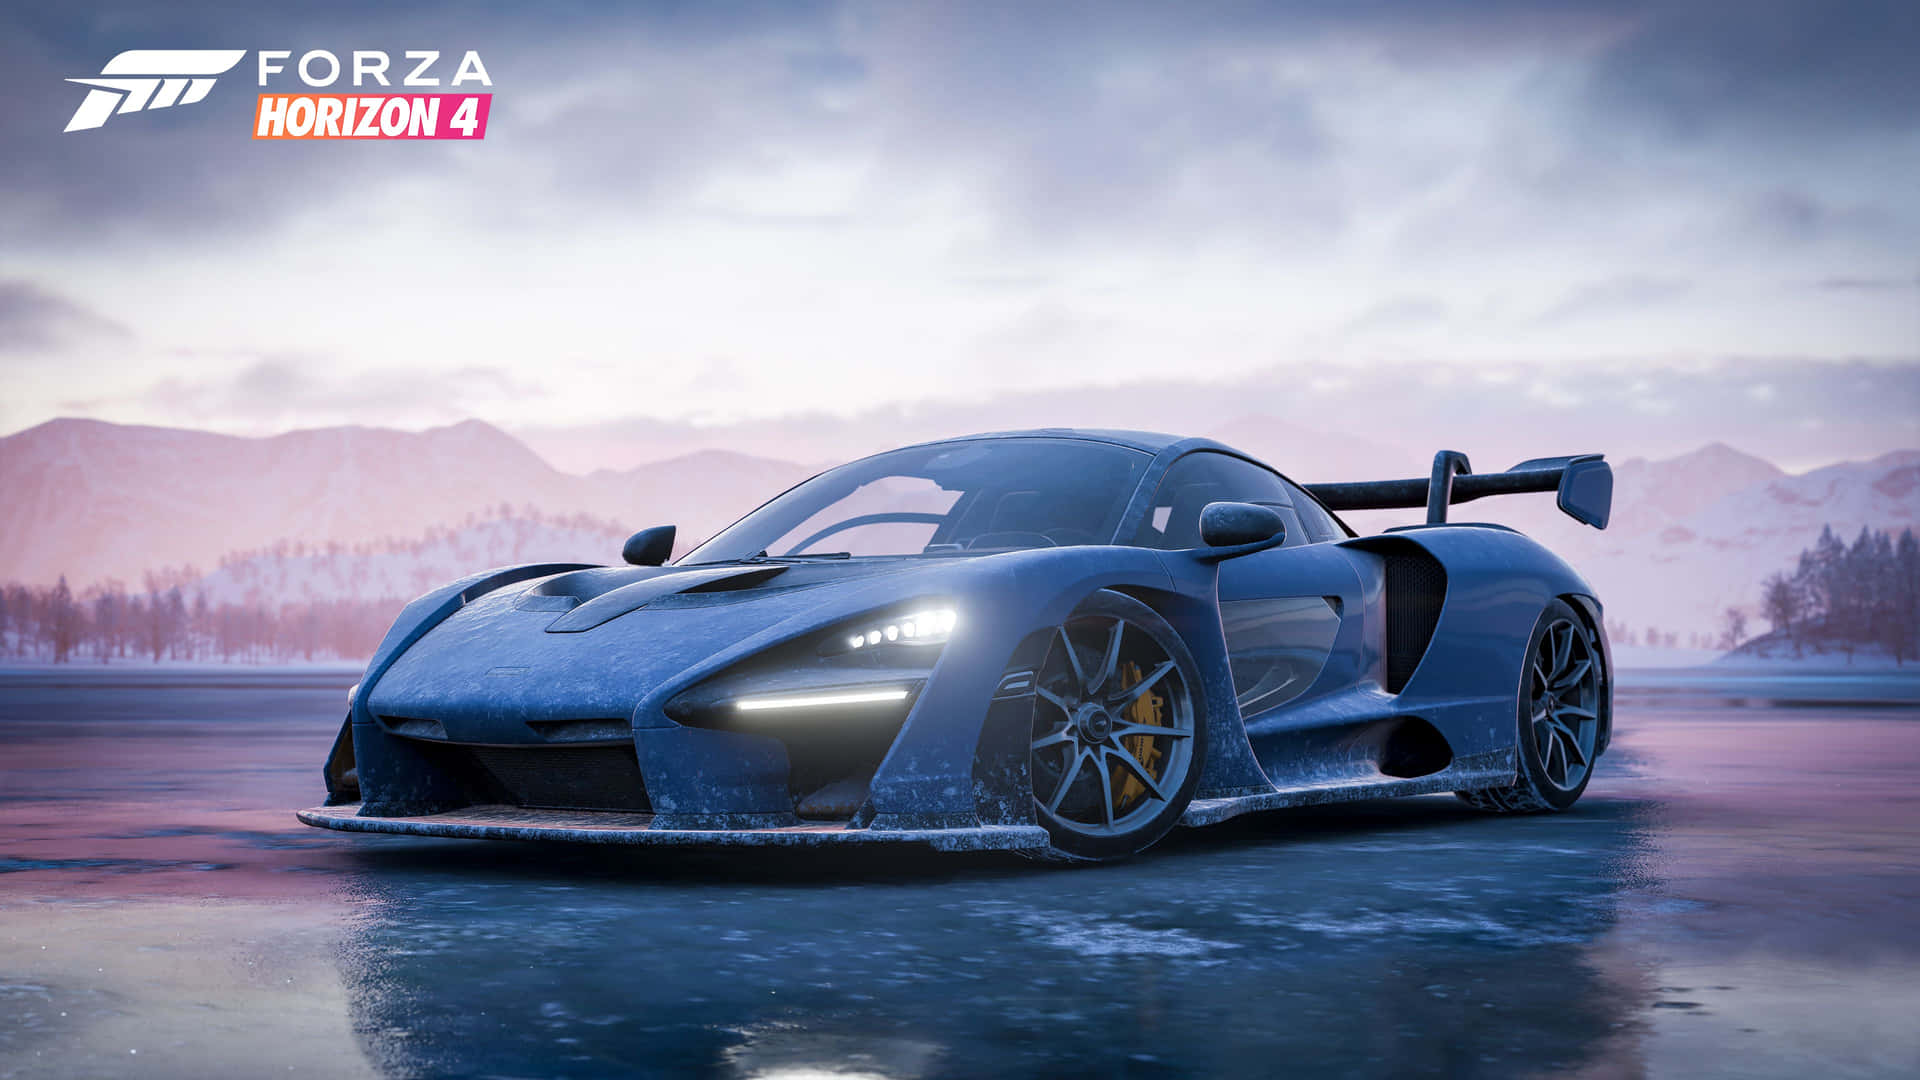 Forza Horizon 4 - A Blue Sports Car In The Snow Wallpaper